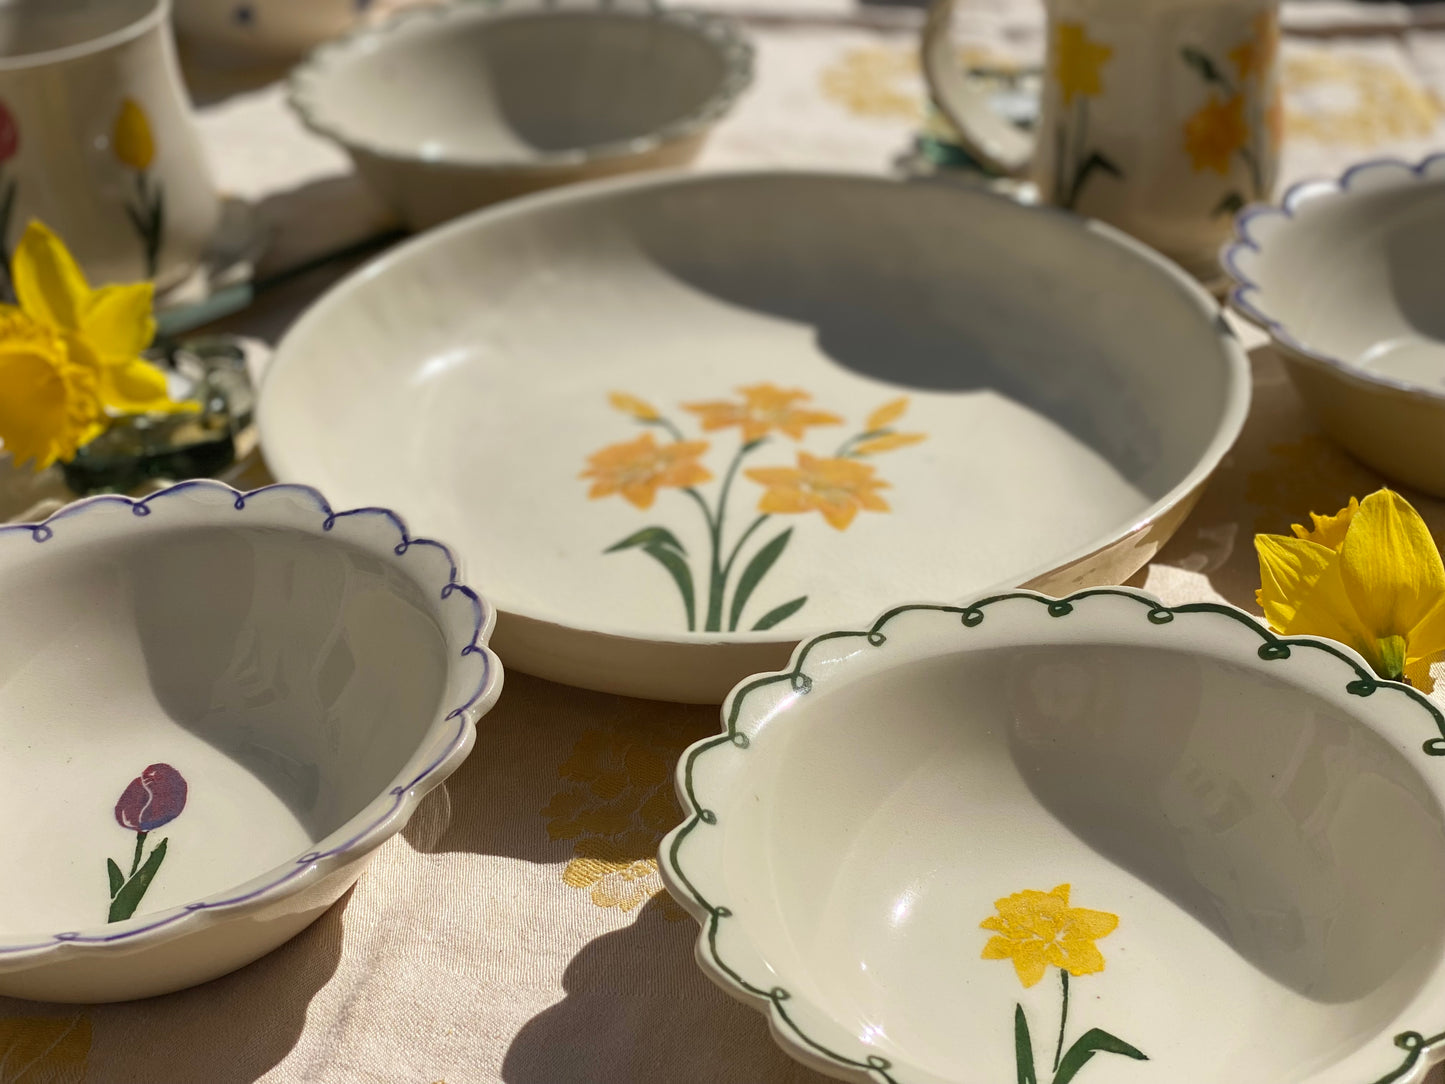 Daffodil Teacup Set